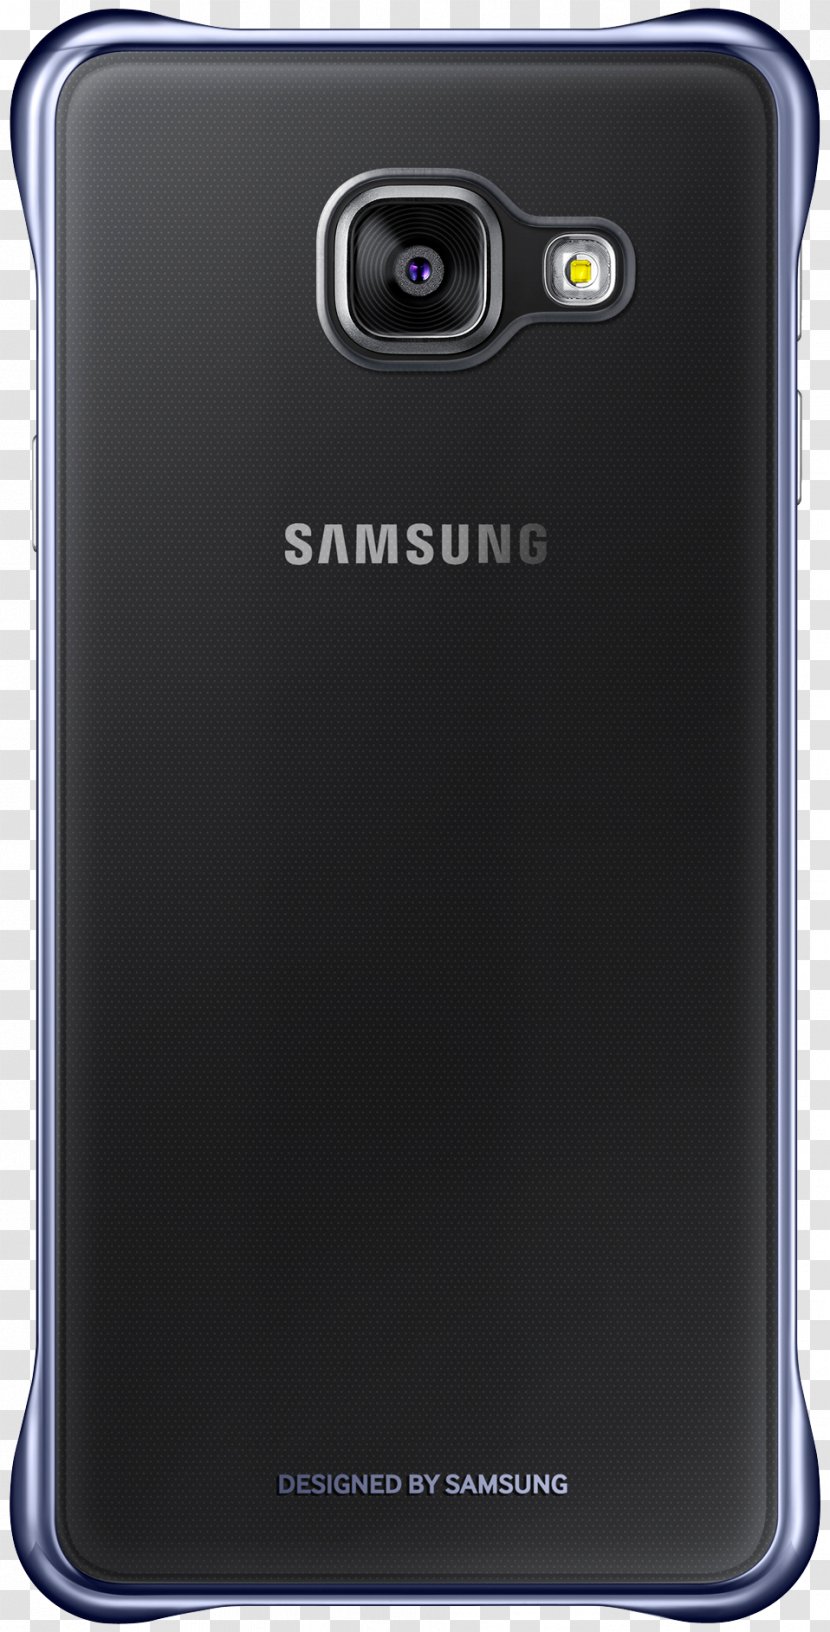 Samsung GALAXY S7 Edge Galaxy A5 (2016) A3 (2015) S8 (2017) - Smartphone Transparent PNG